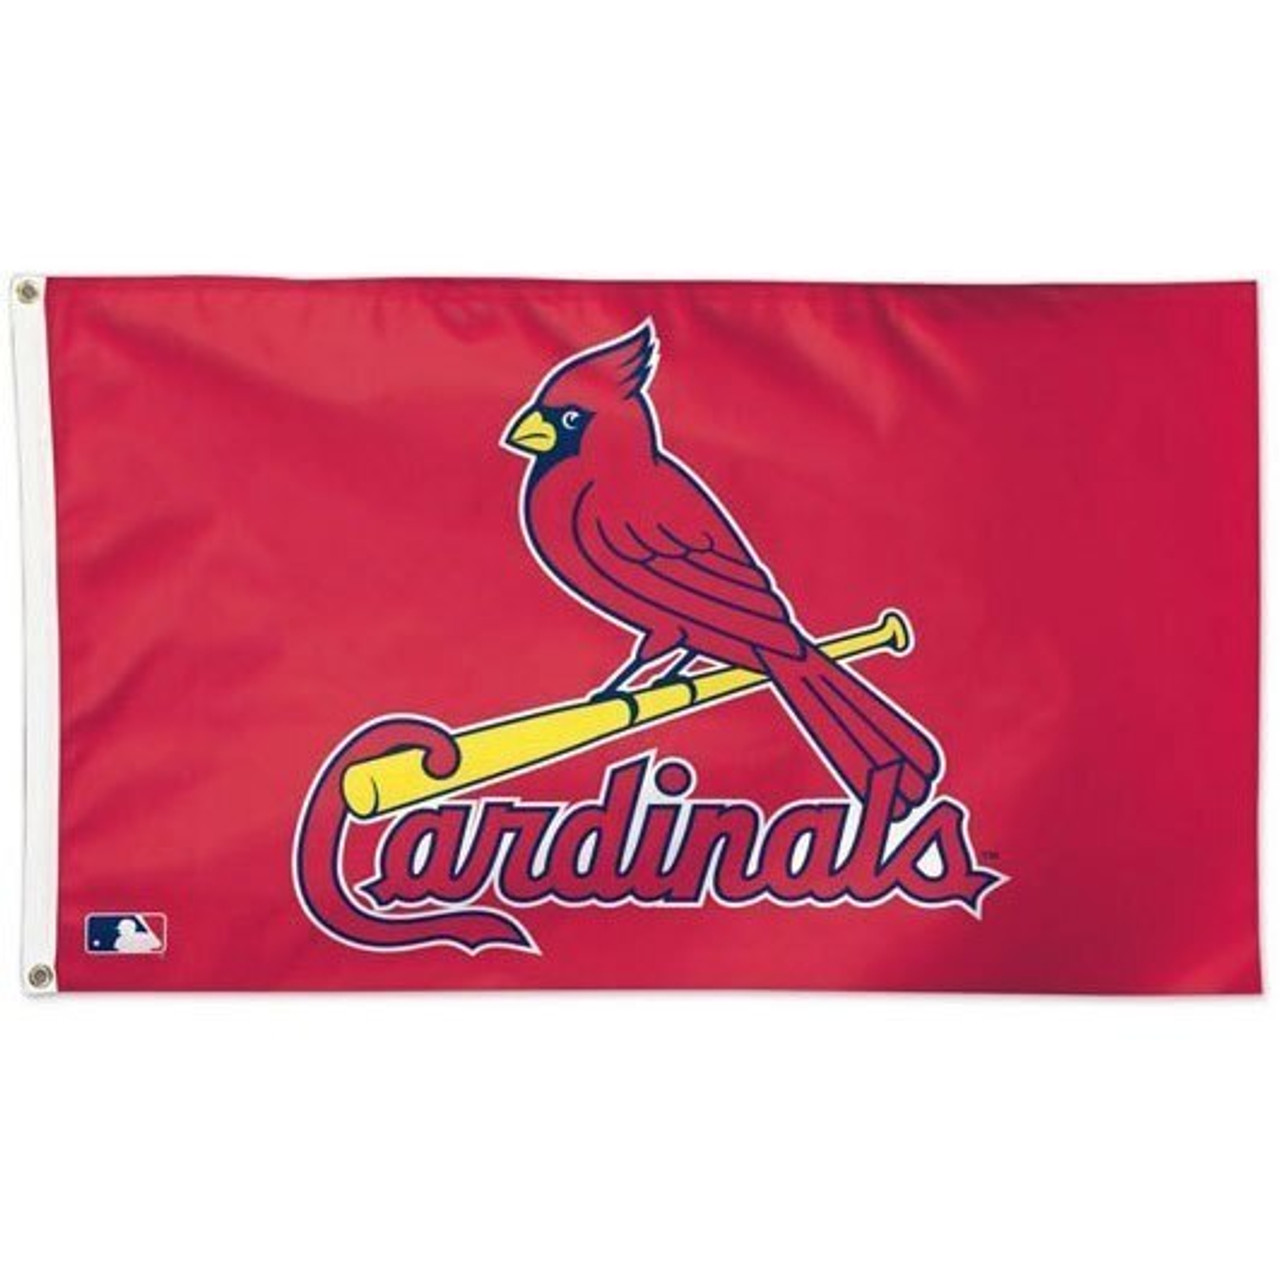 St. Louis Cardinals Sports Fan Magnets for sale